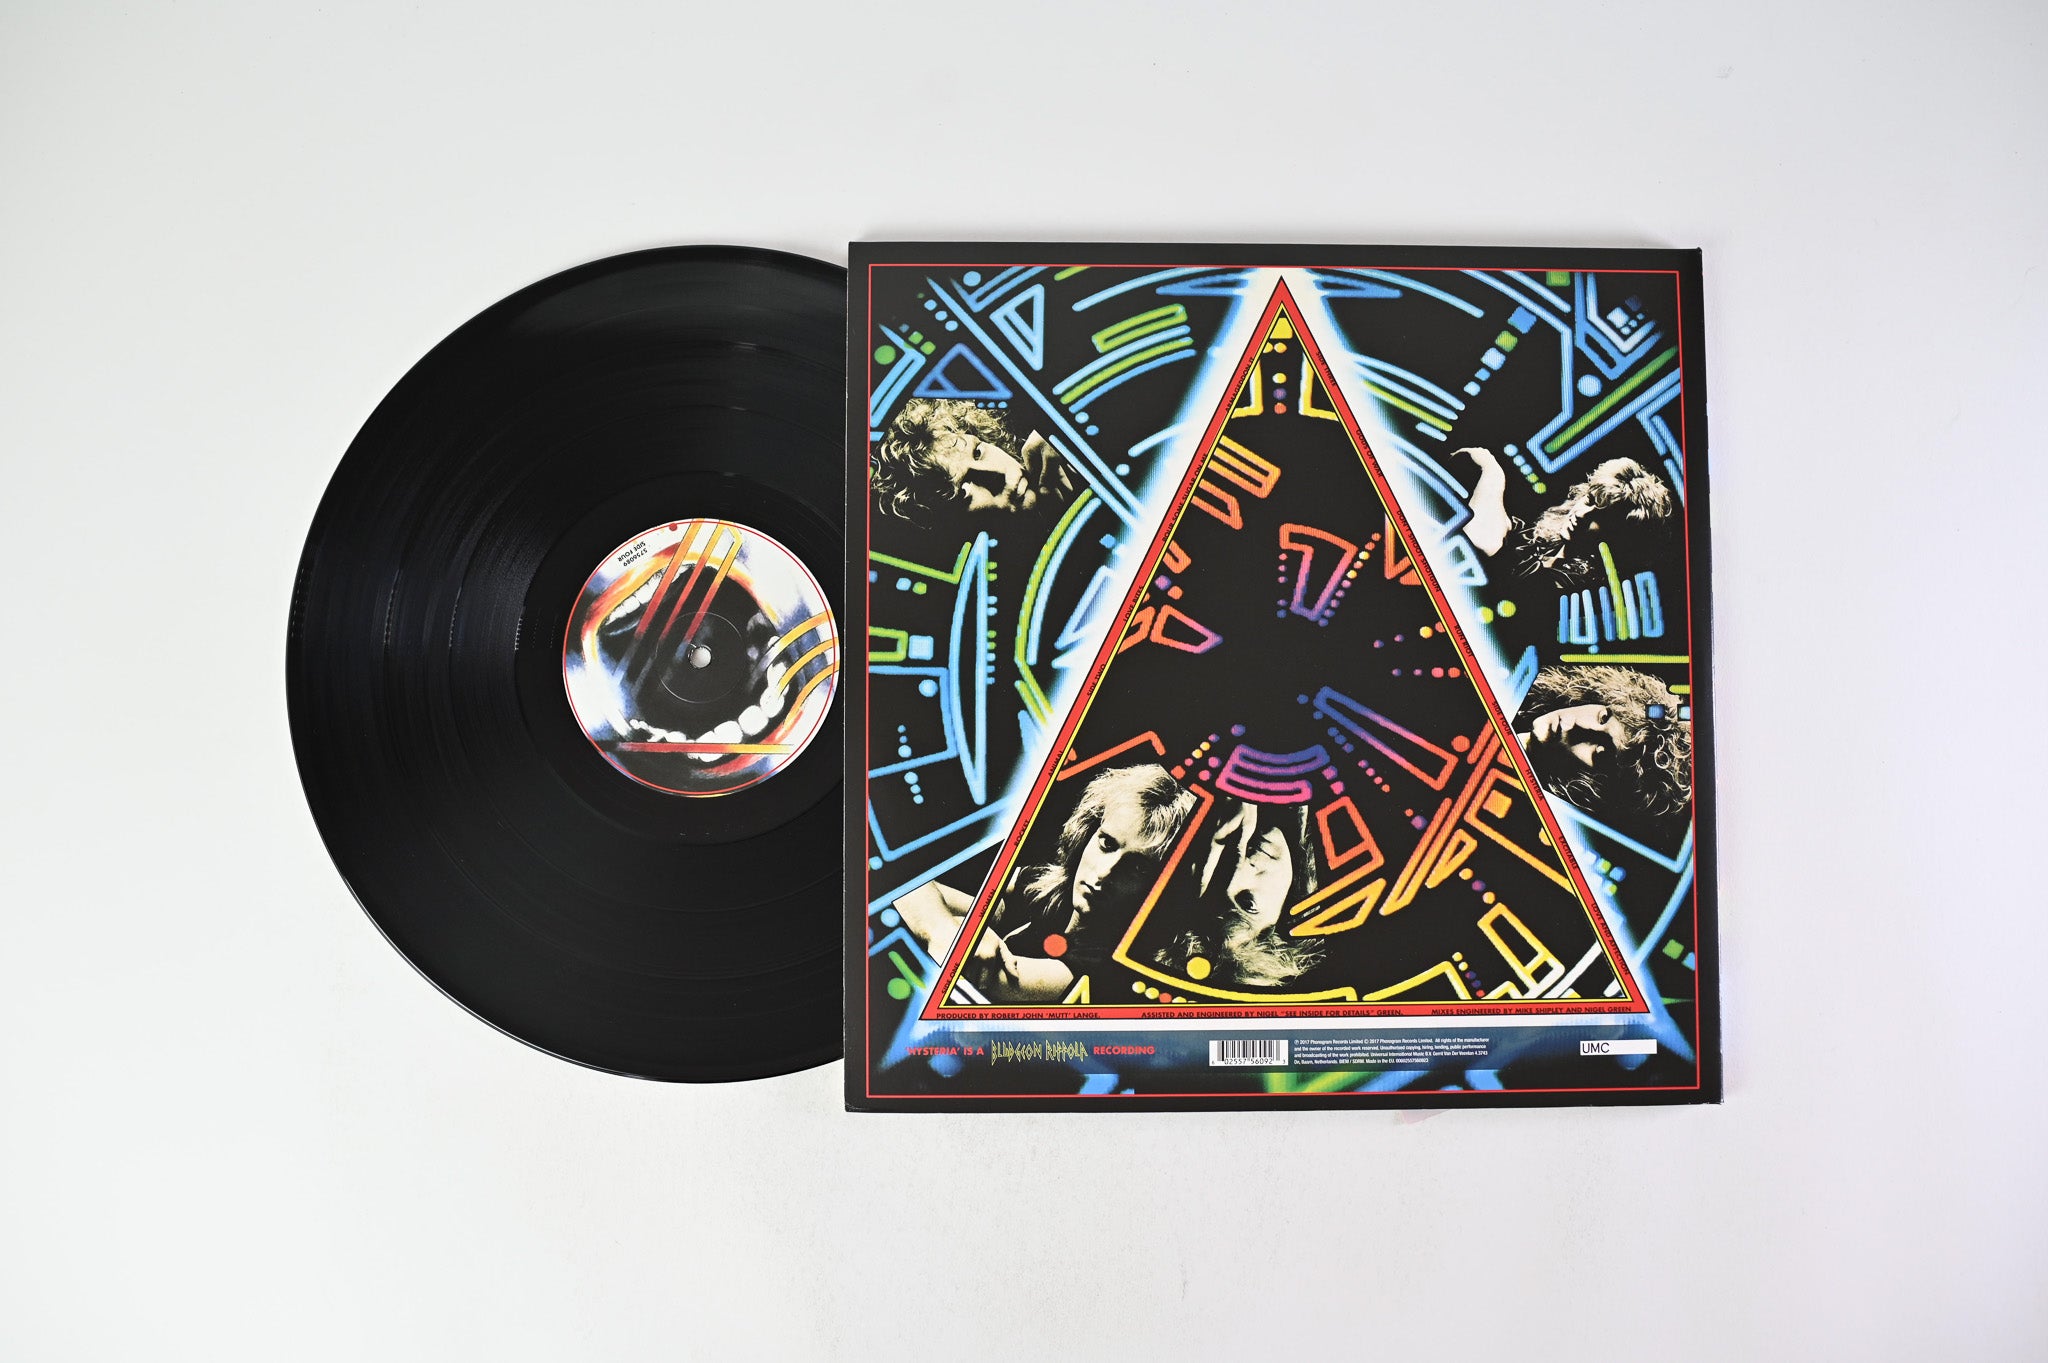 Def Leppard - Hysteria on UMC 180 Gram Reissue